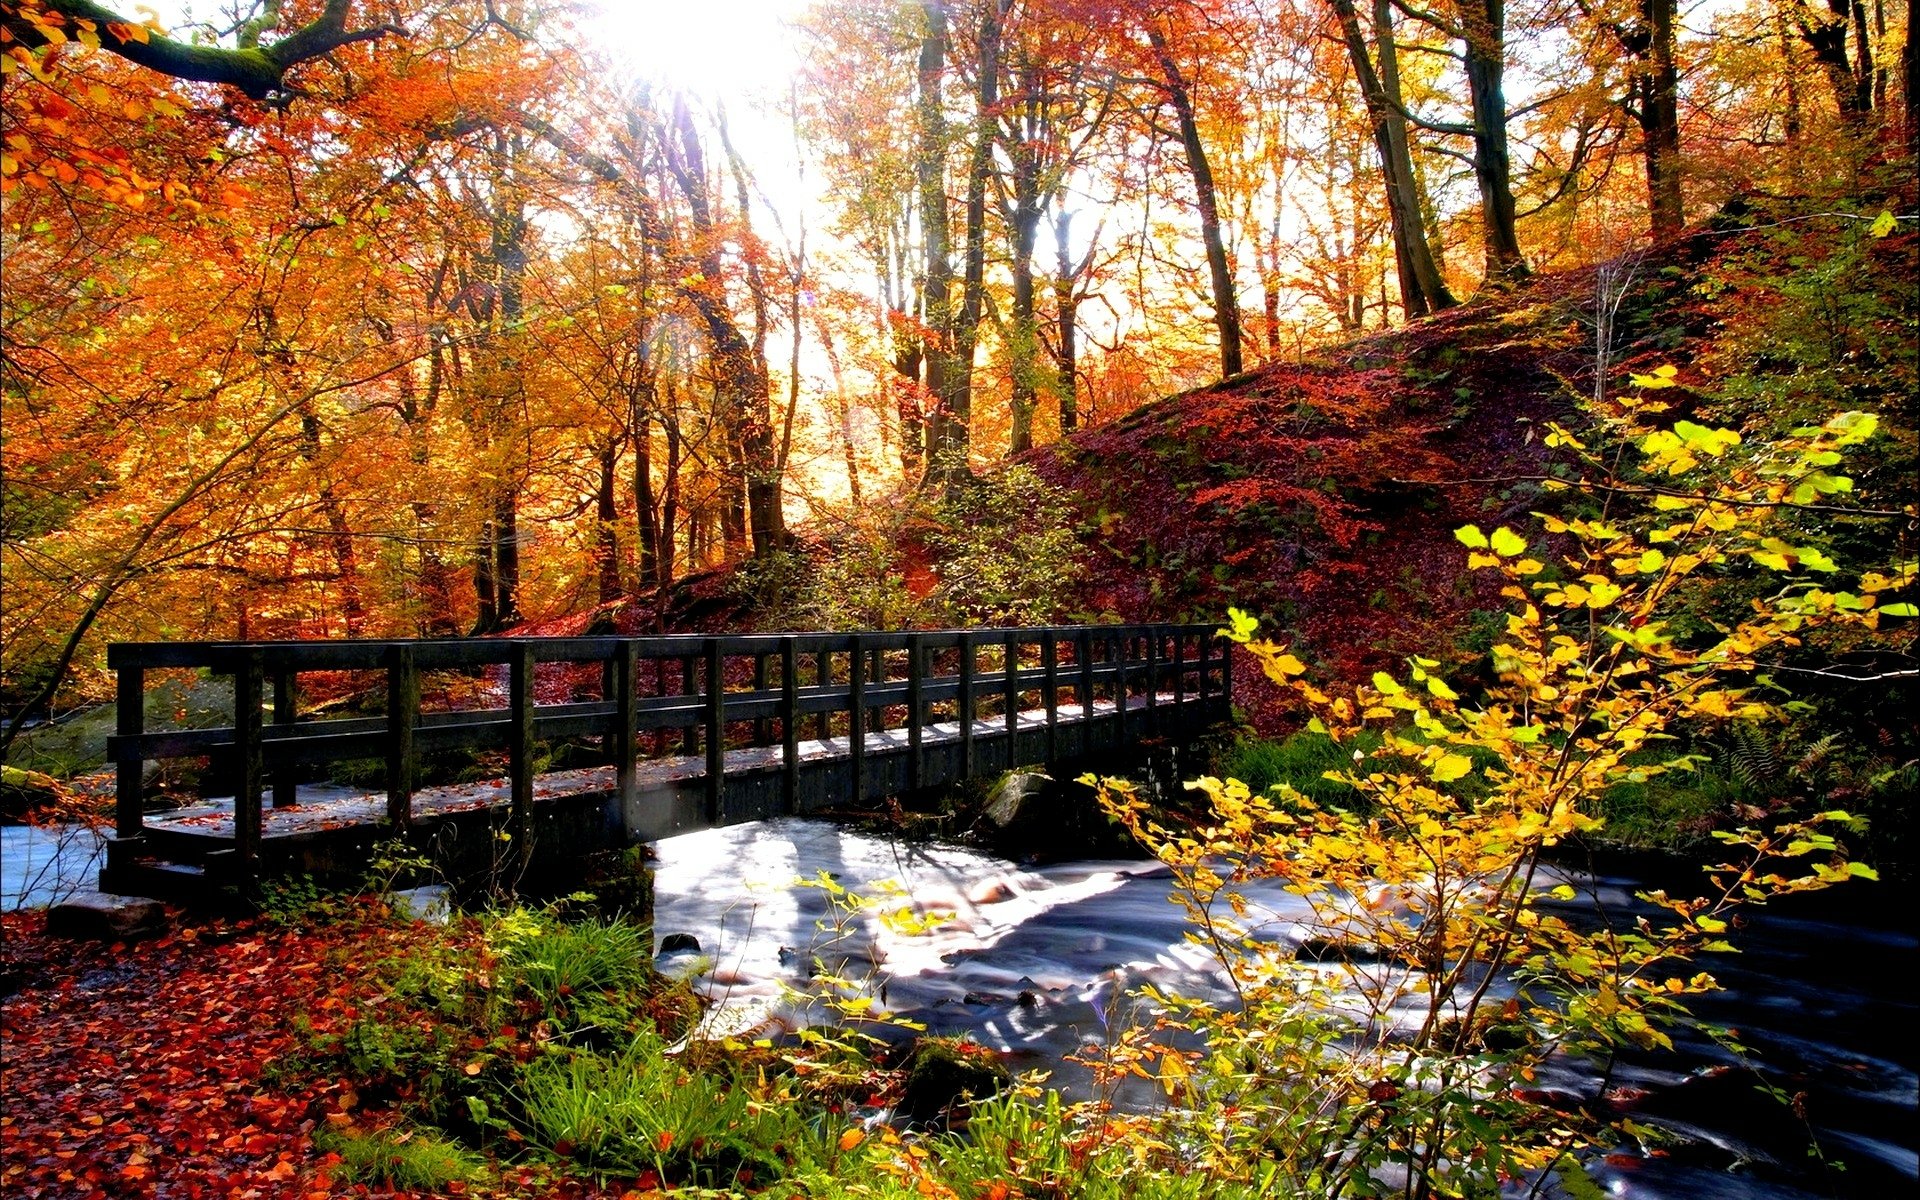 Bridge In Autumn Forest Hd Wallpaper Background Image 1920x1200